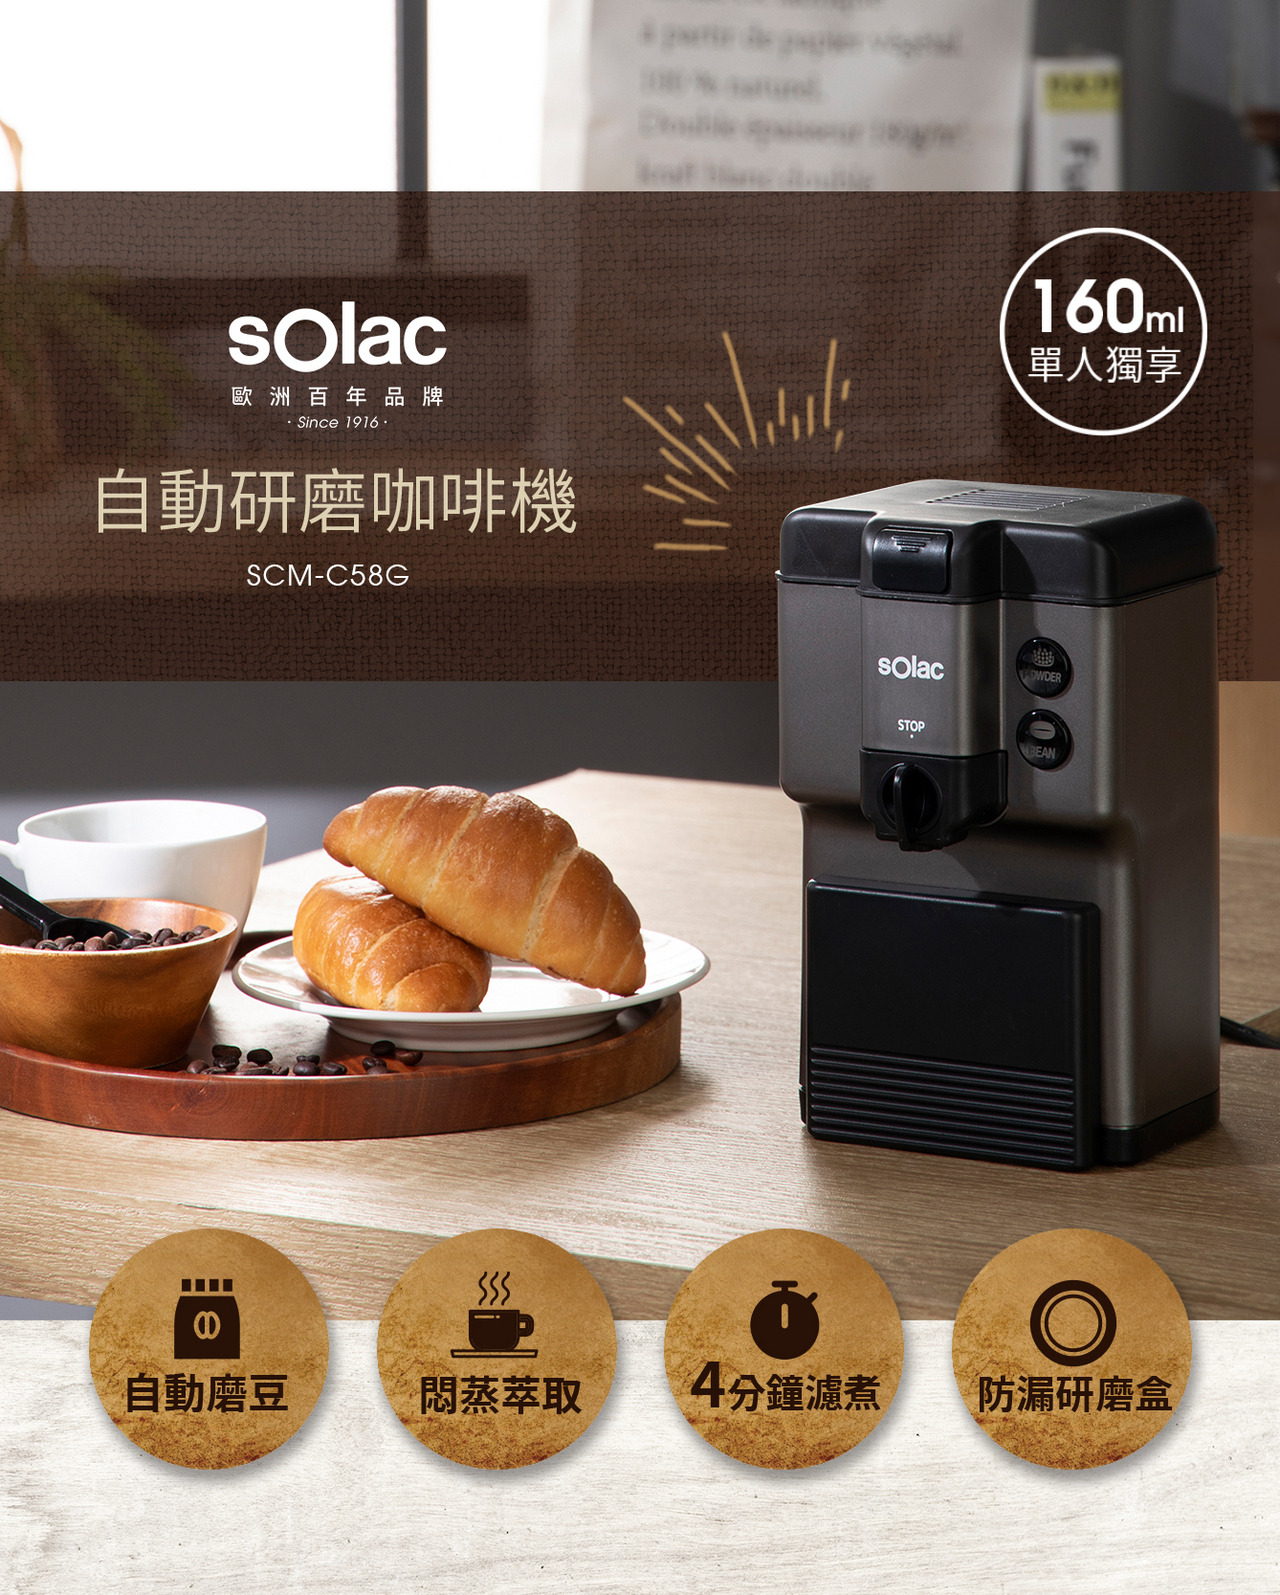 SOLAC 自動研磨咖啡機的展示